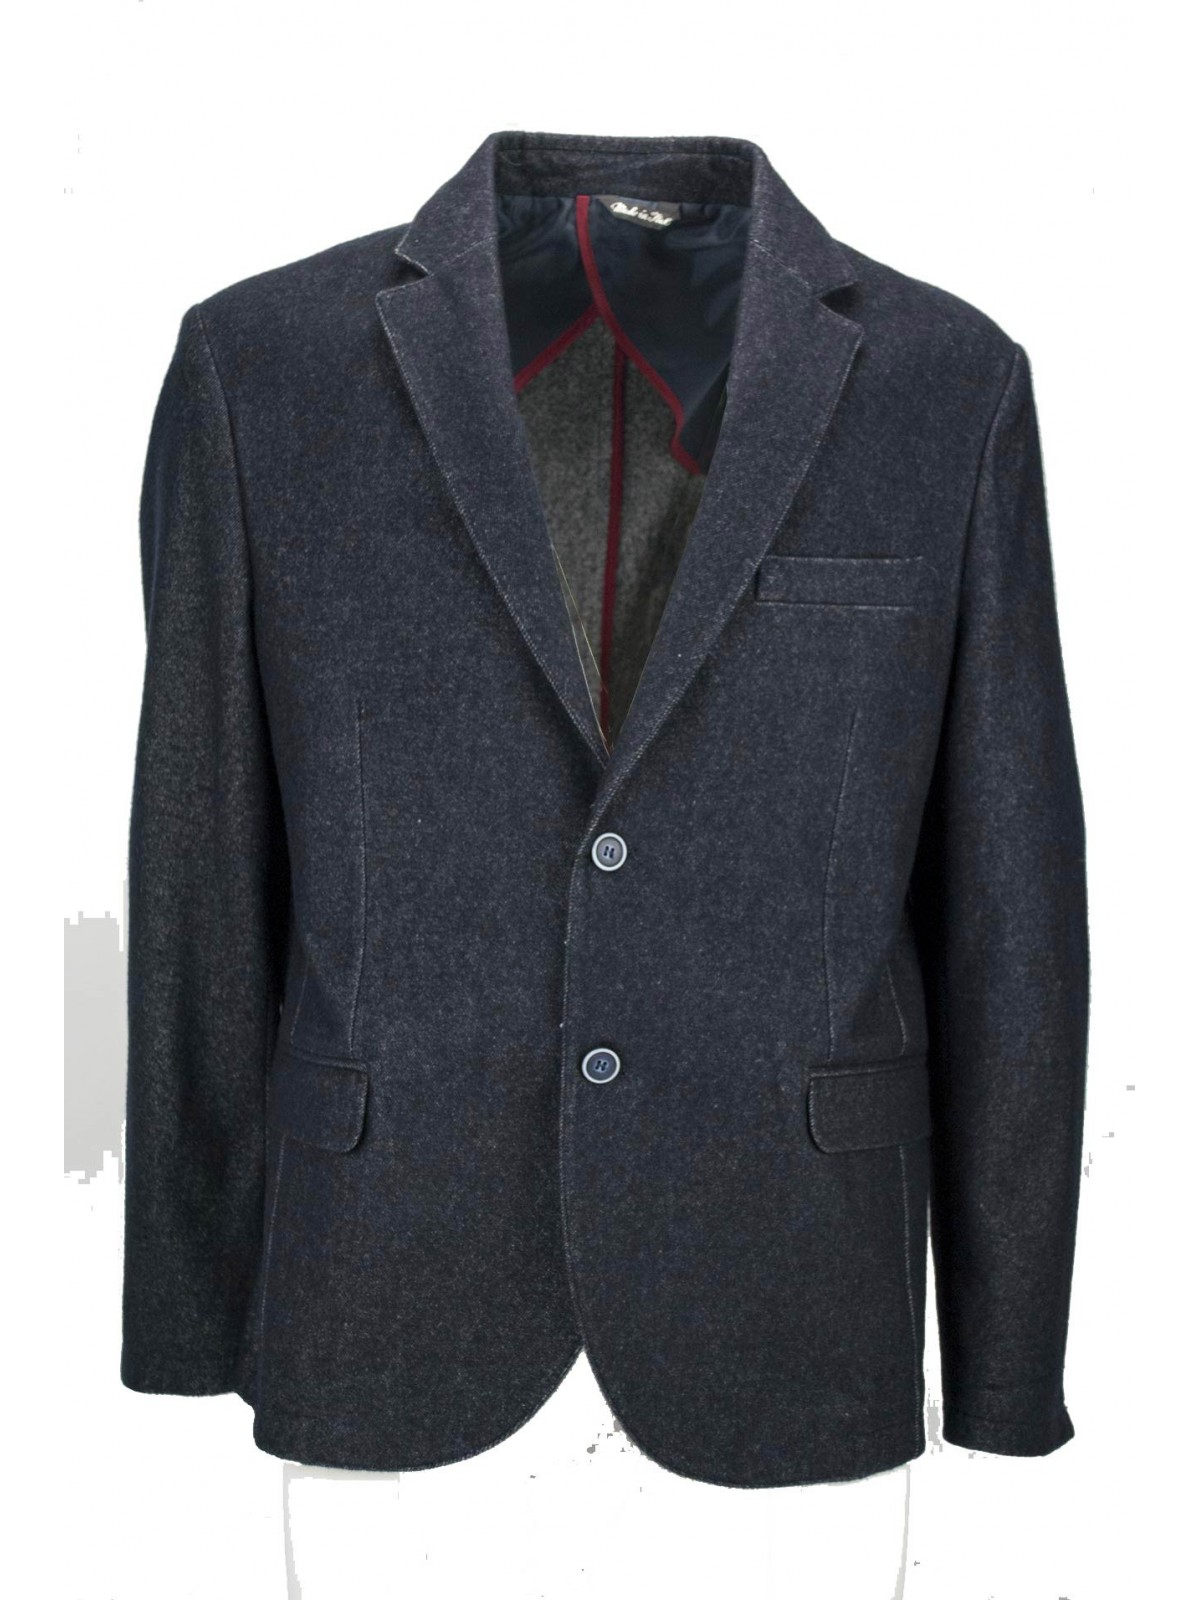 Men's Jacket 54 Dark Blue Indigo Wool Cloth 2 Buttons Semi-lined - Short Fit